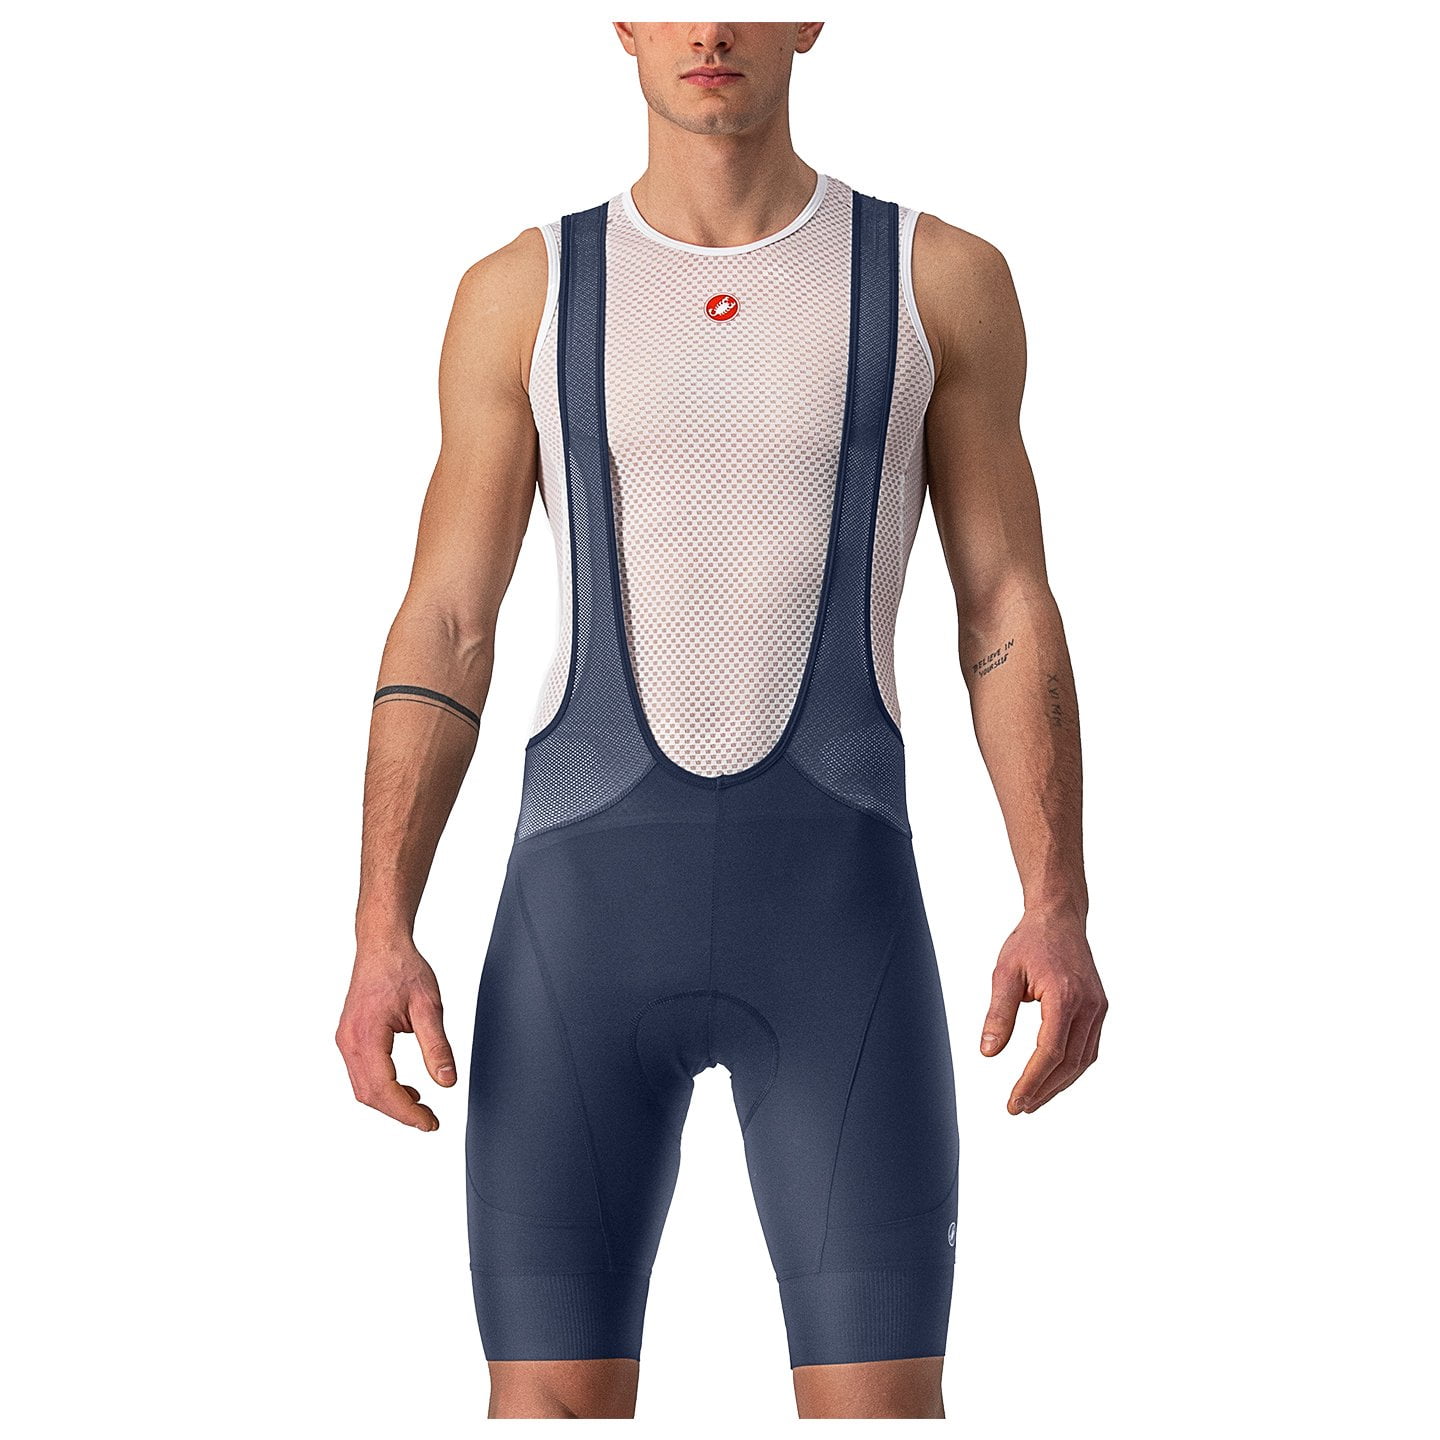 Endurance 3 Bib Shorts Bib Shorts, for men, size 3XL, Cycle trousers, Cycle gear